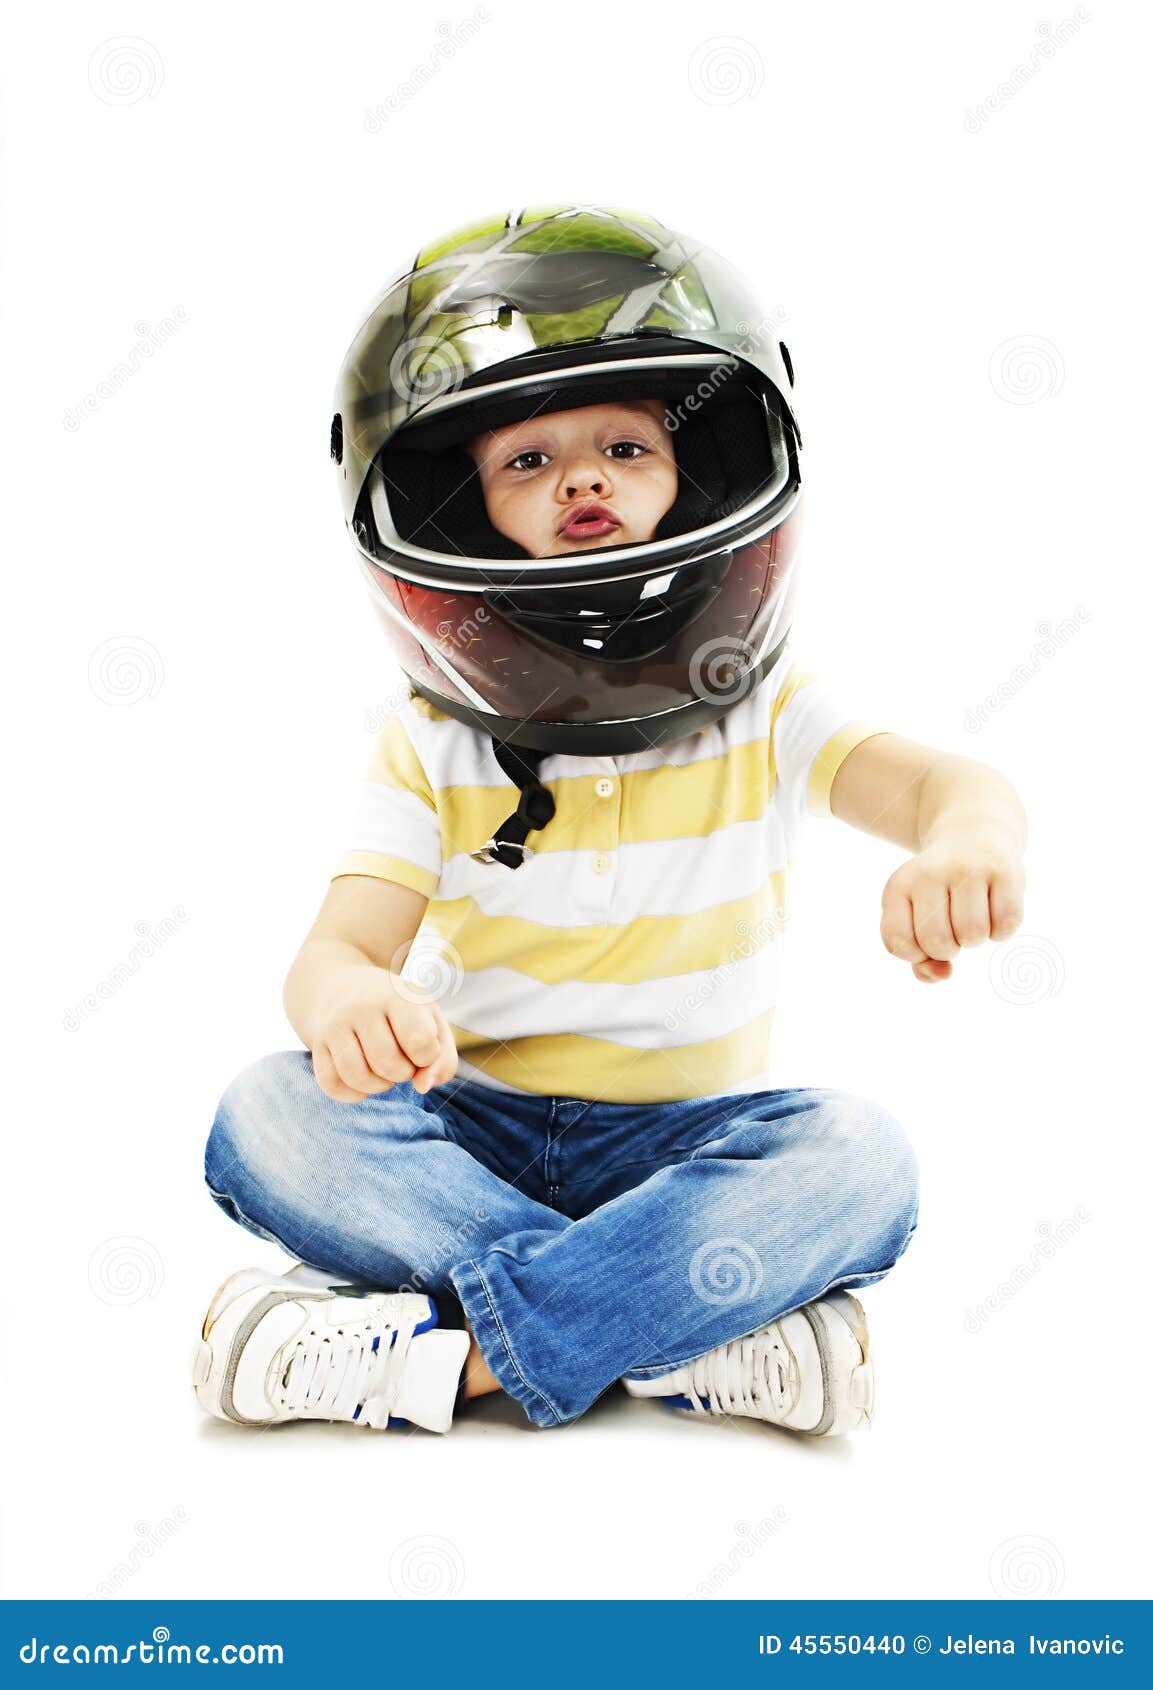 boy-helmet-pretending-to-drive-motorcycle-isolated-white-background-45550440.jpg